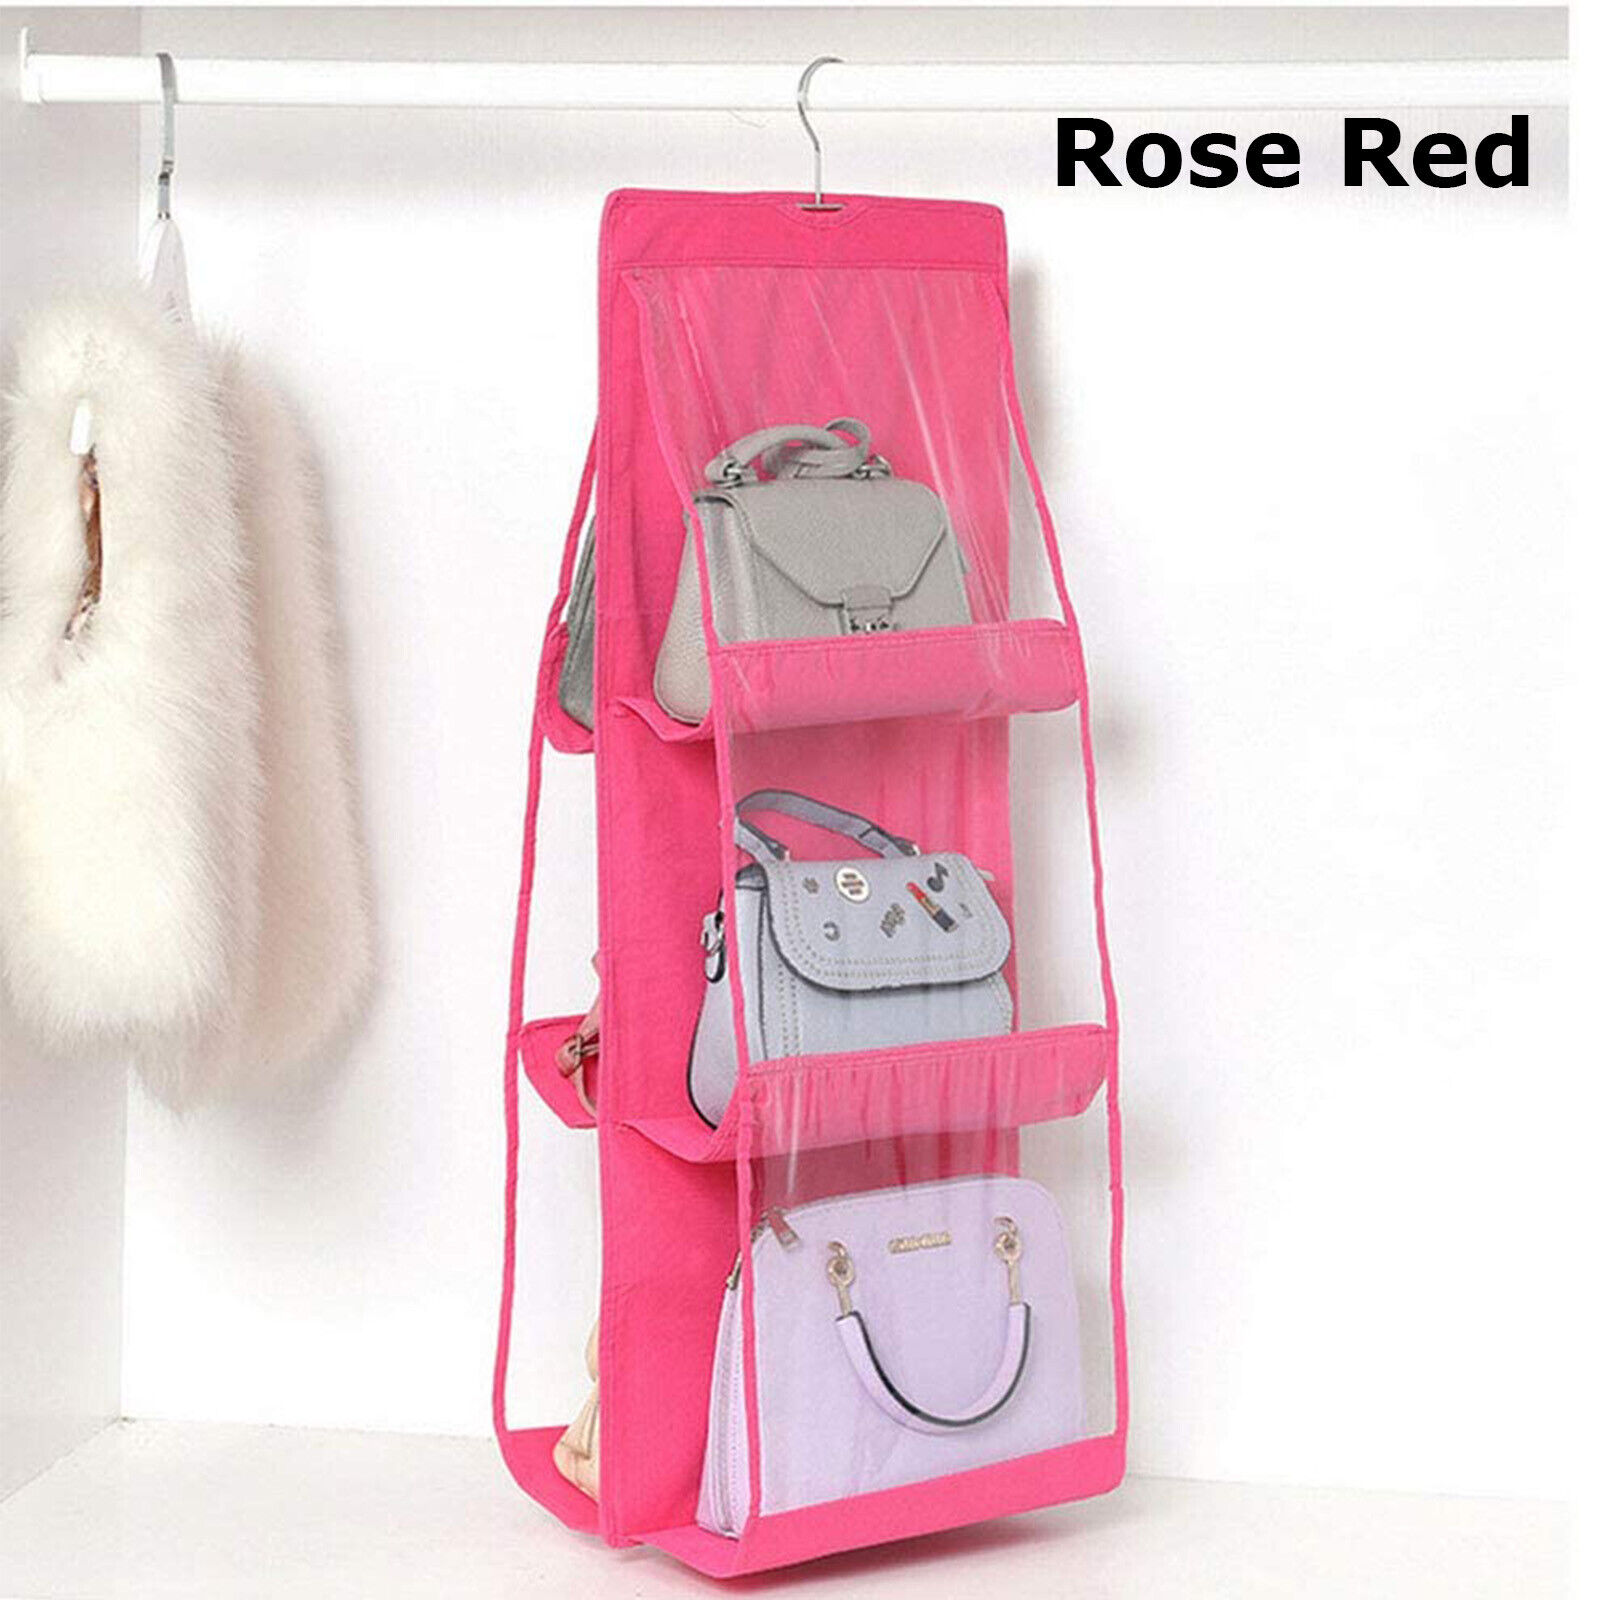 6 Pockets Rose Red Hanging Organiser Bag Handbag Organiser Shelf Bag Storage Purse Closet Organizers